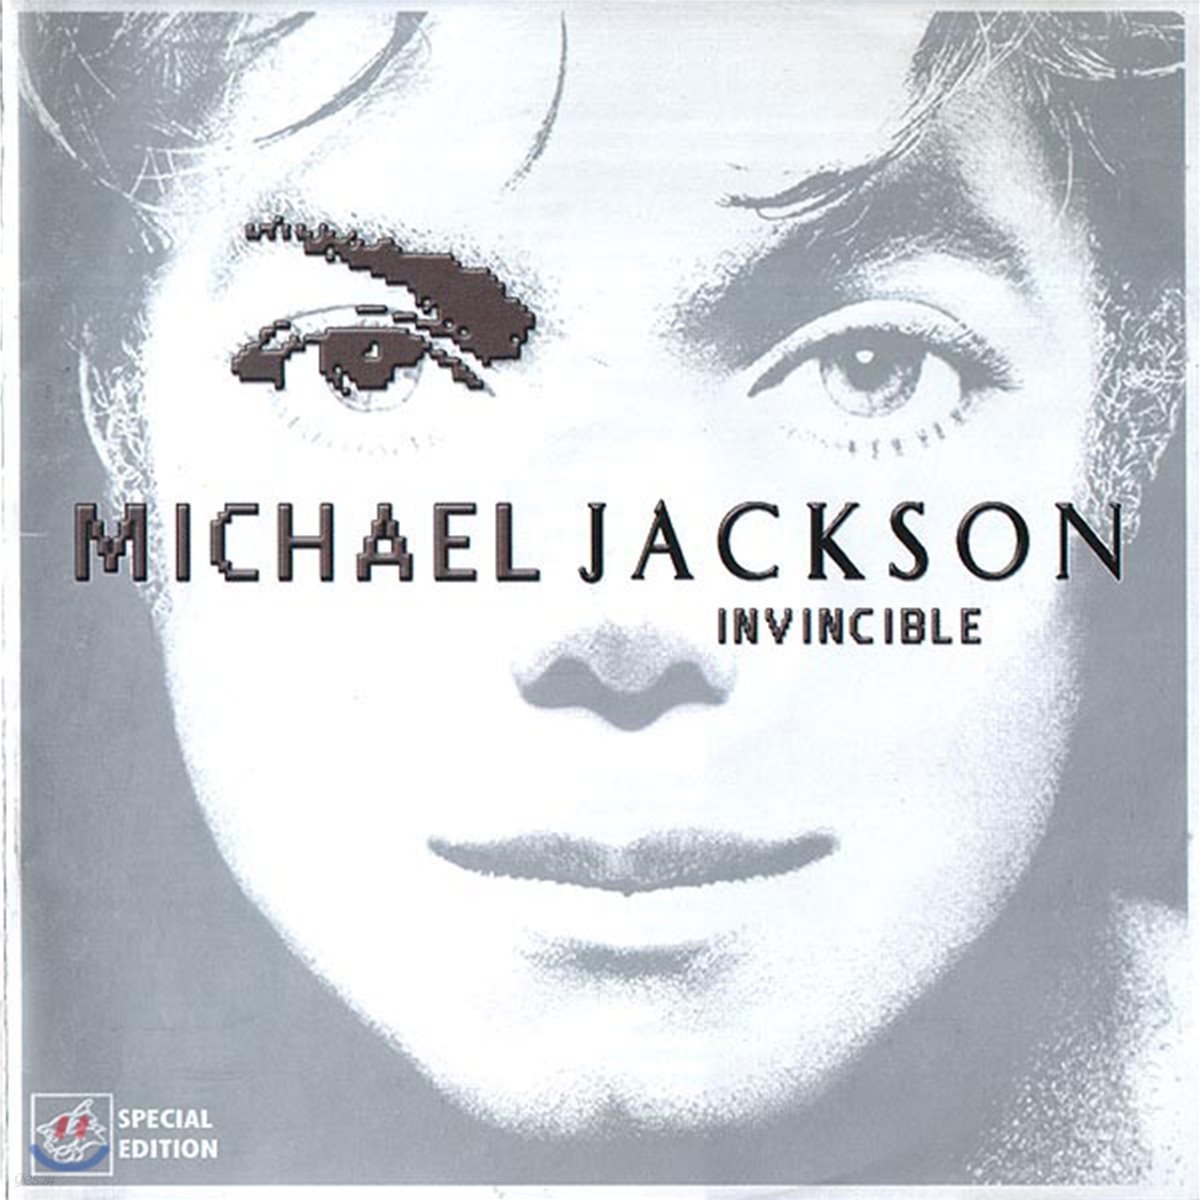 Michael Jackson (마이클 잭슨) - Invincible [픽쳐디스크 2LP]